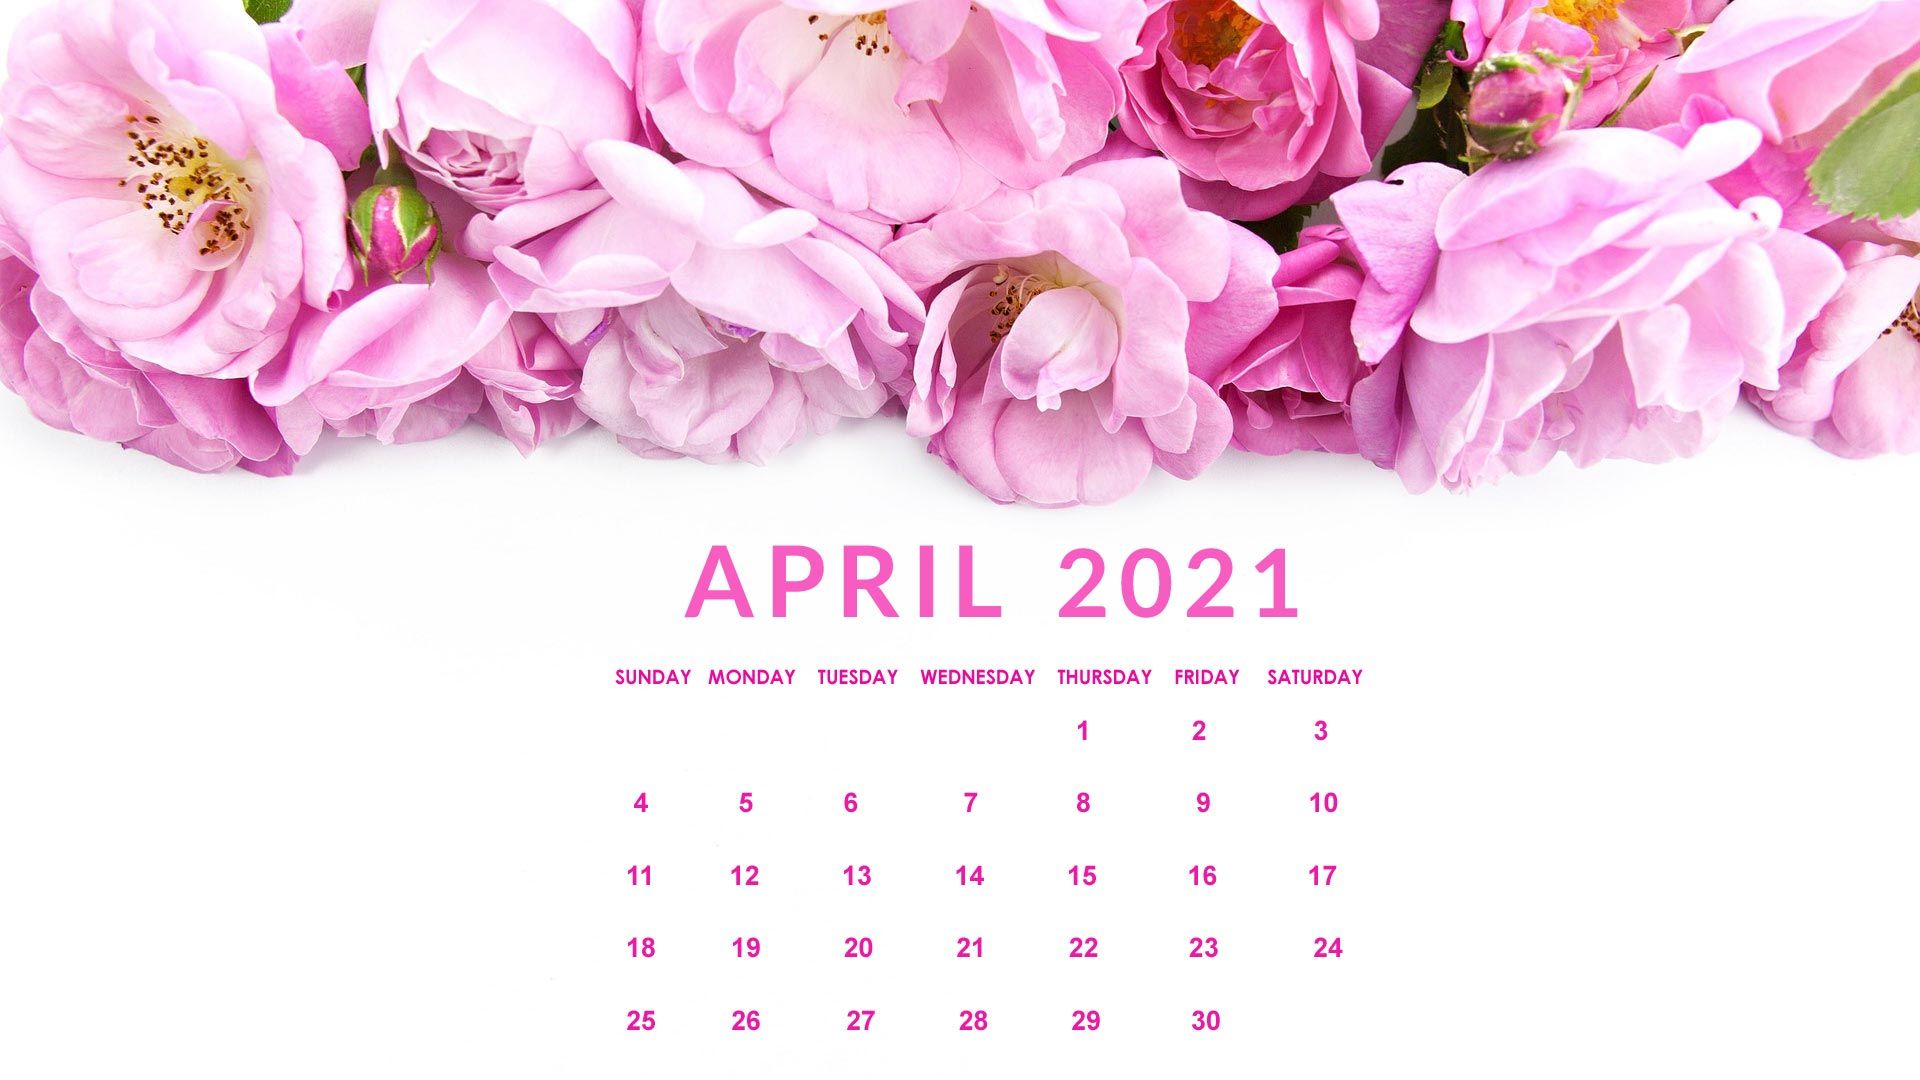 April 2021 Calendar Wallpaper Desktop Image ID 3